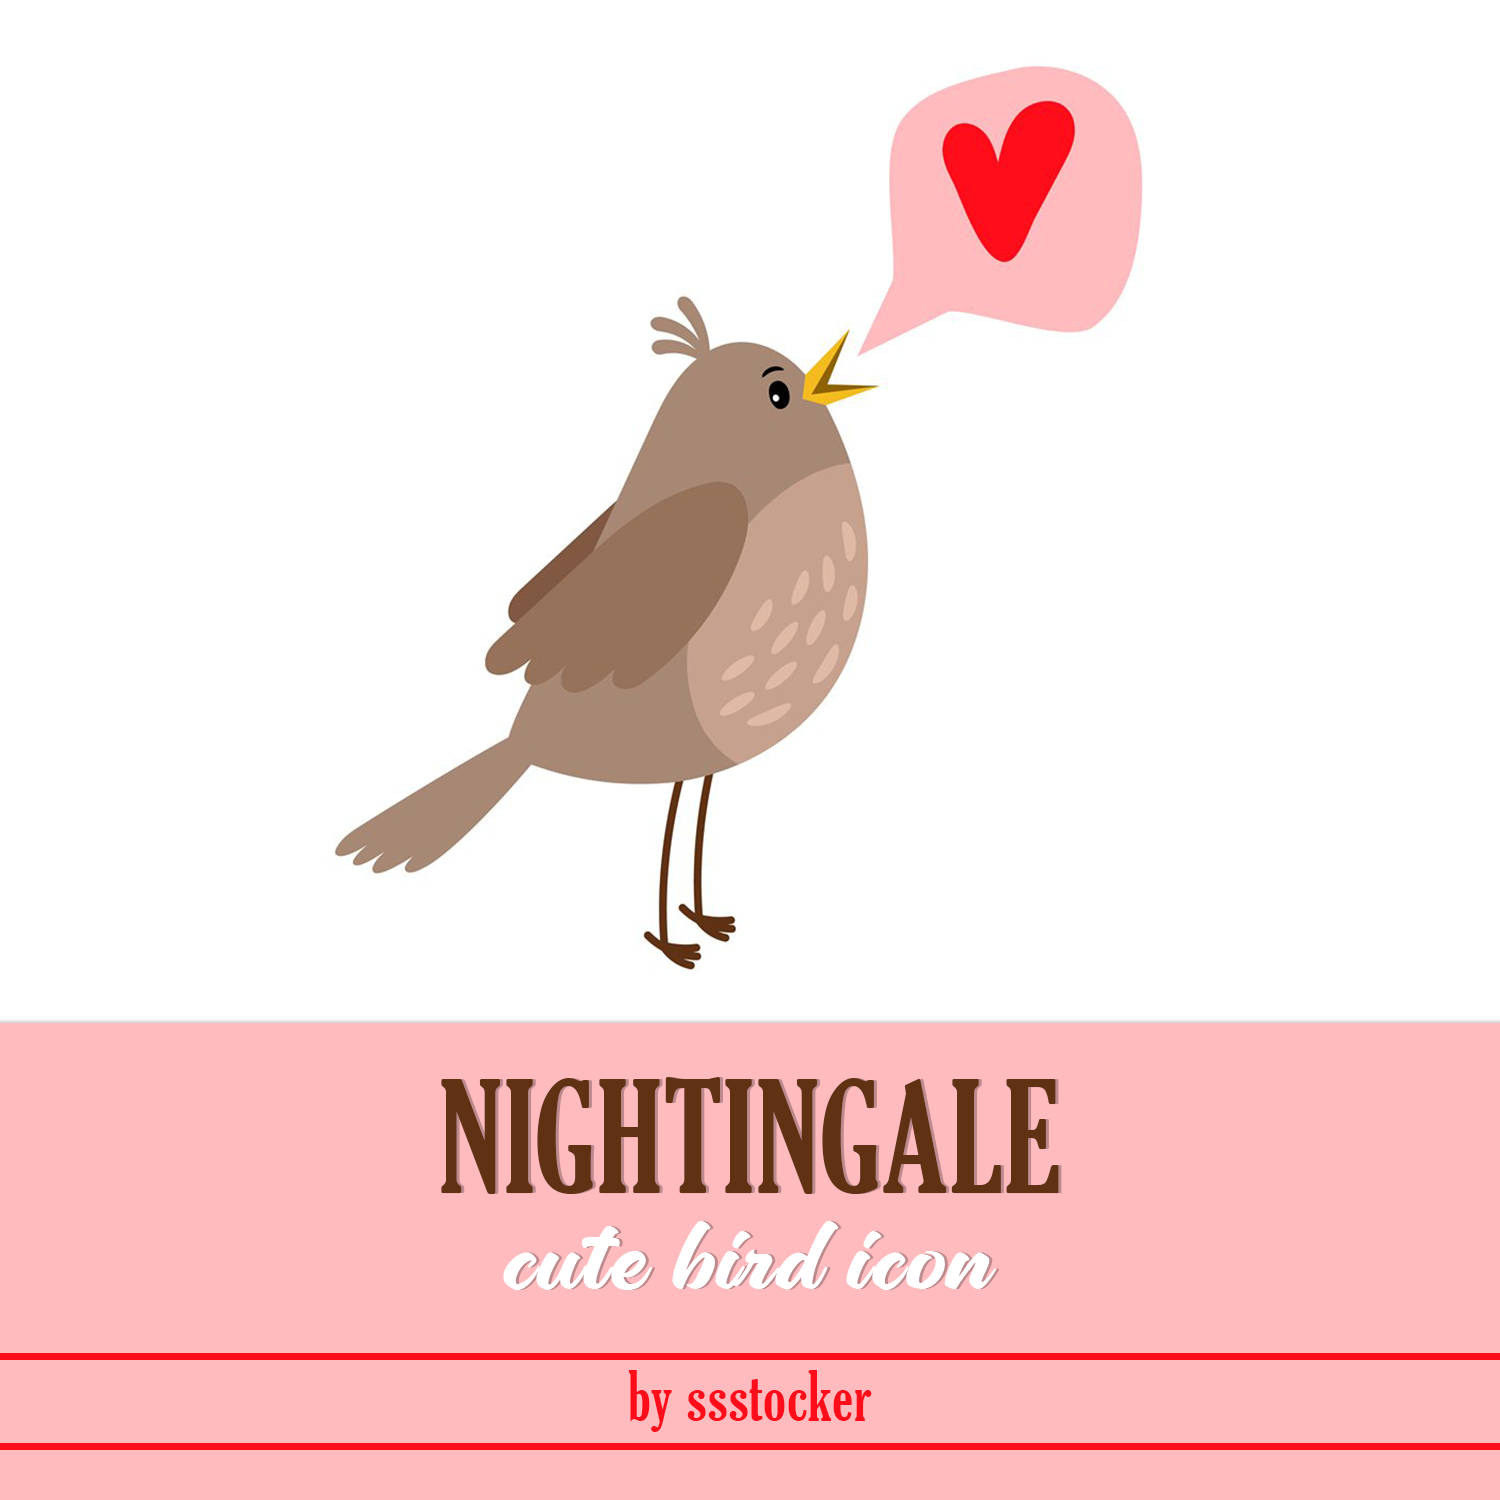 Nightingale cute bird icon cover.